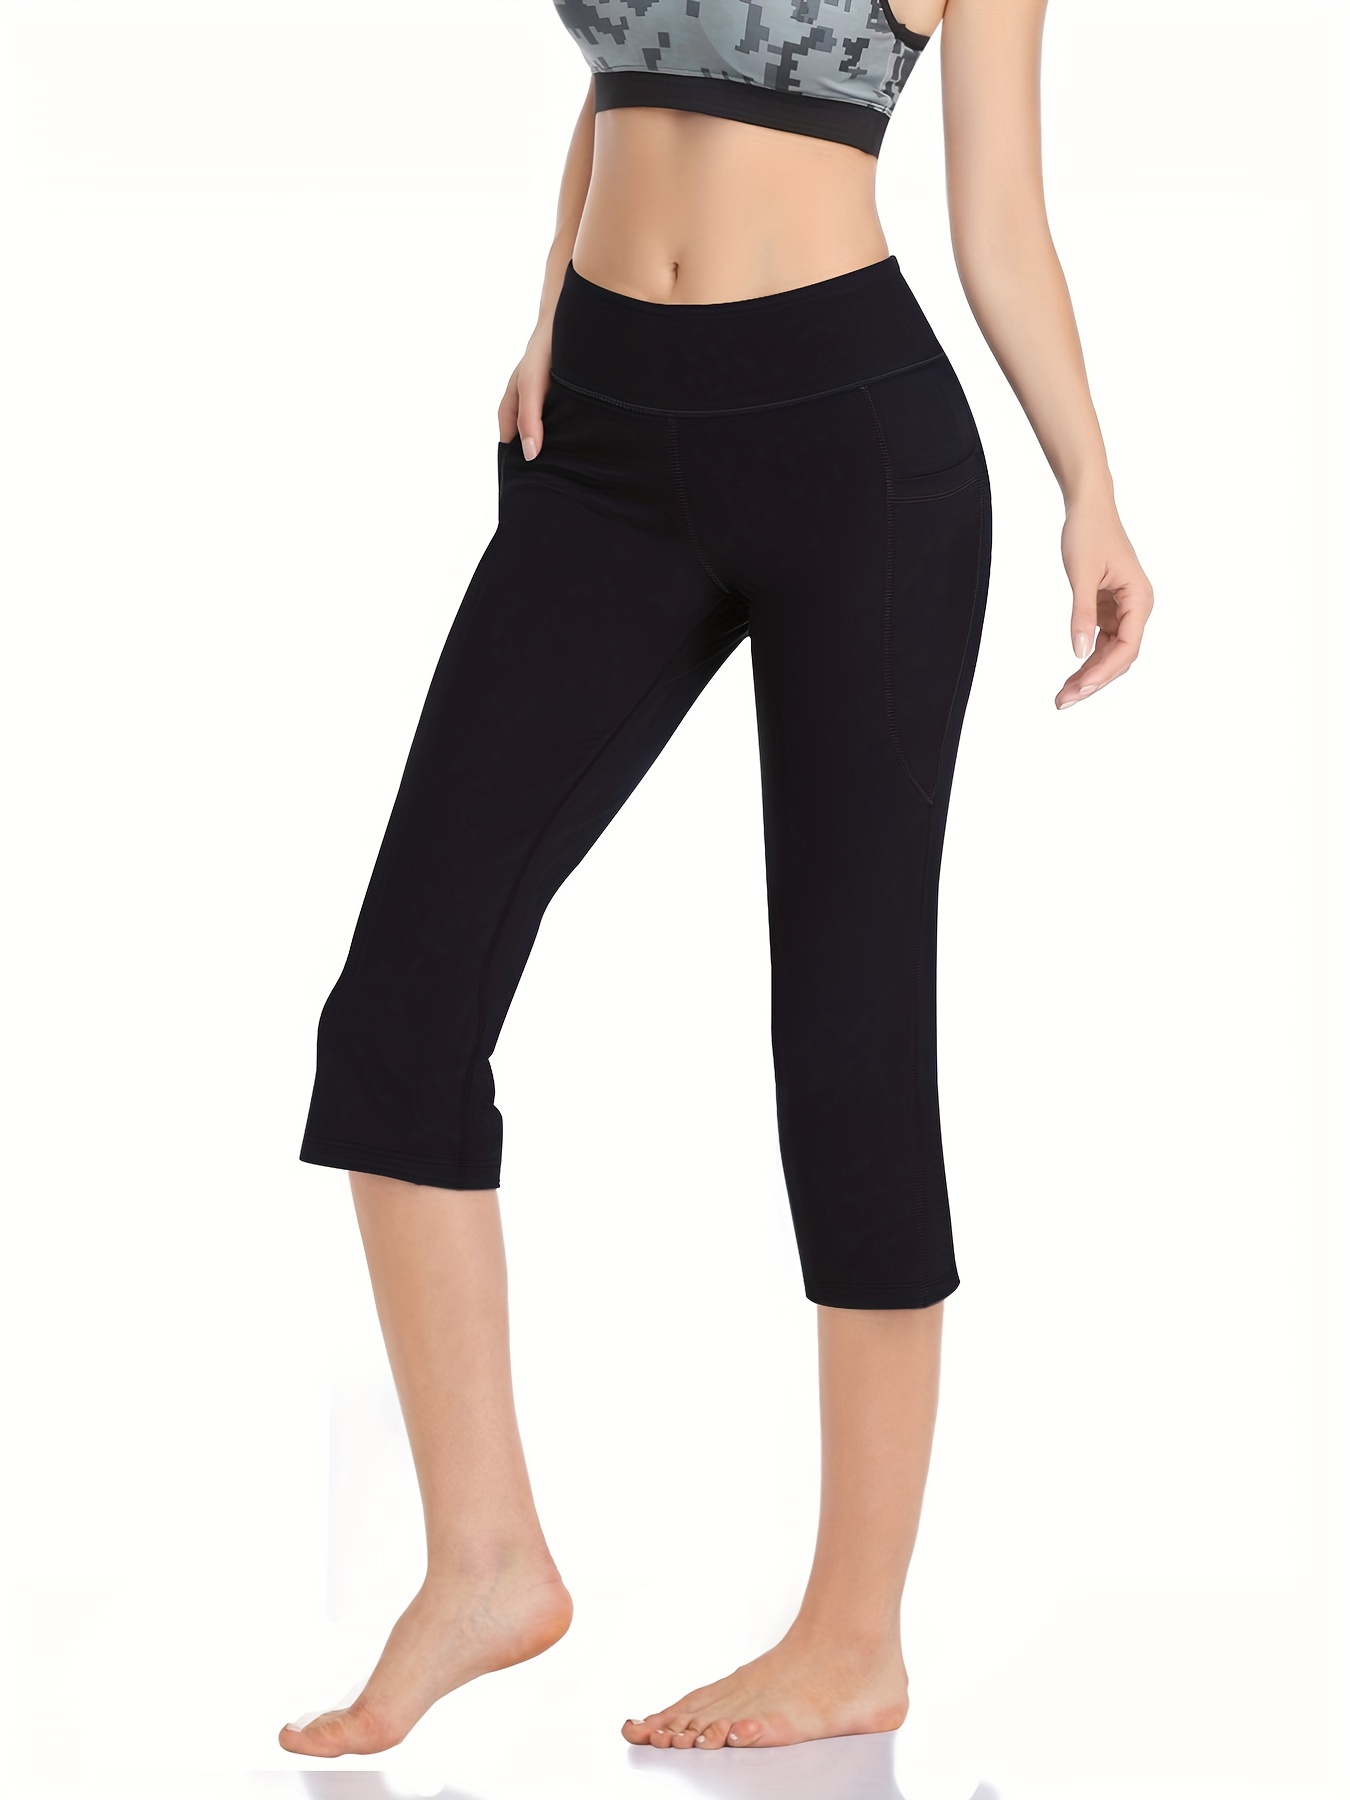  Capri Flare Leggings For Women - High Waist Tummy Control  Bootcut Yoga Pants Workout Flare Capris Pants Navy